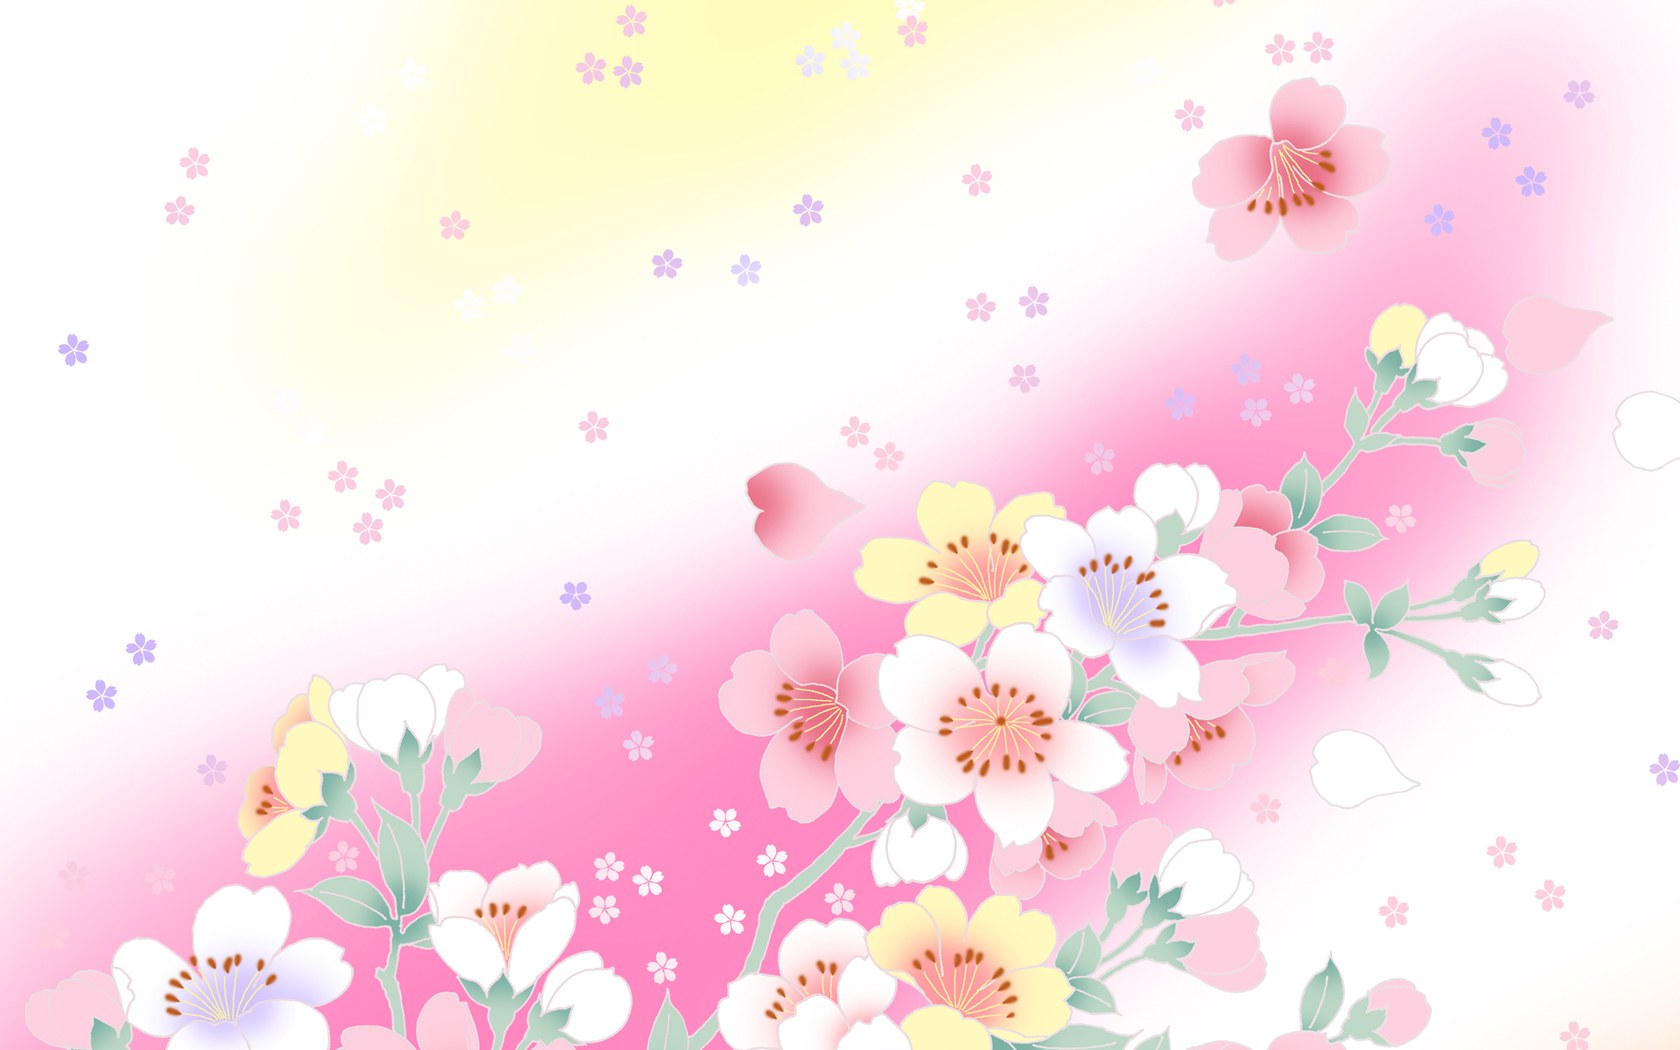 From Flower Wallpaper Designs